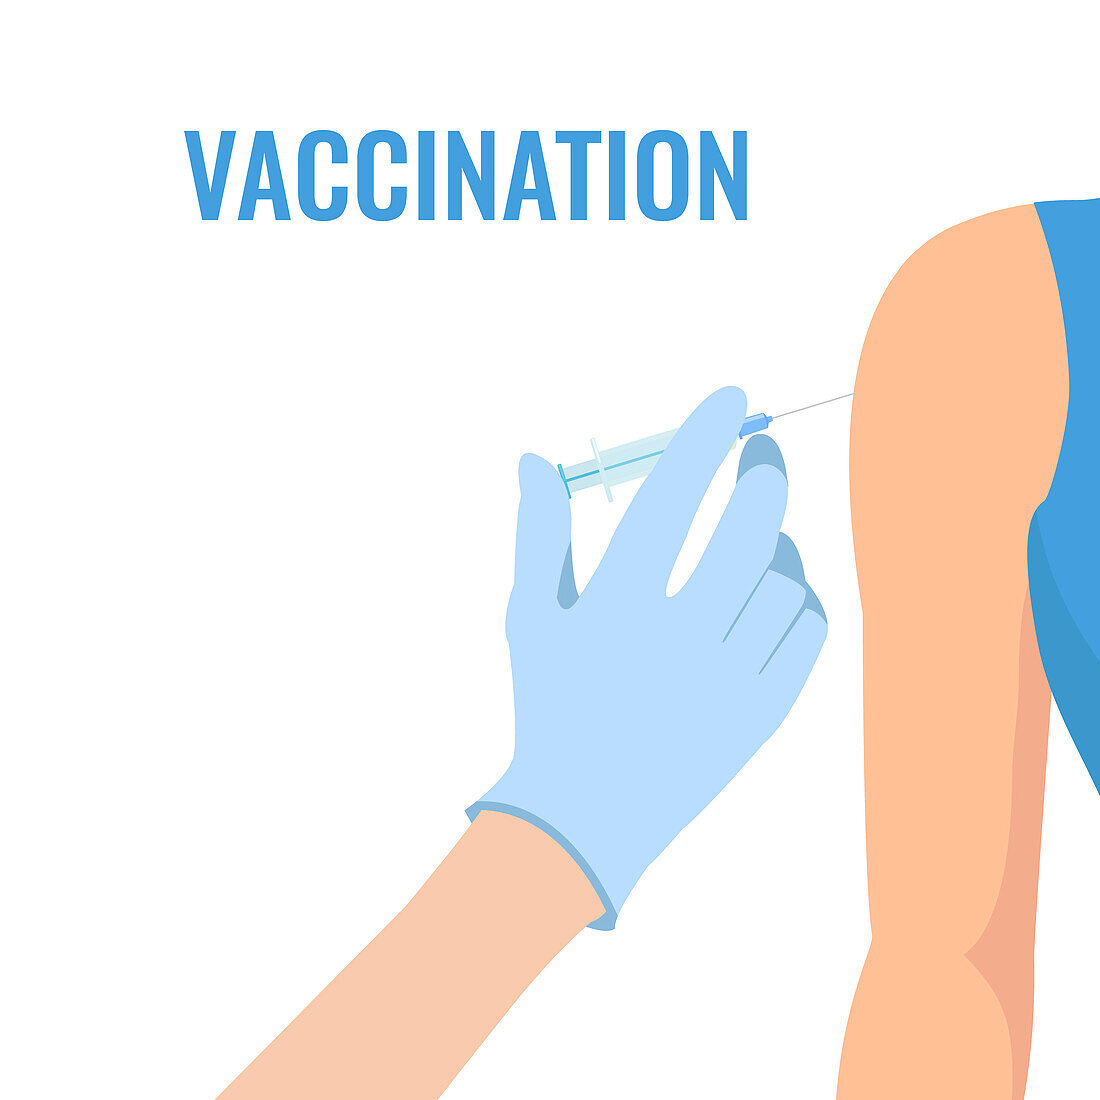 Nurse administering vaccine, illustration